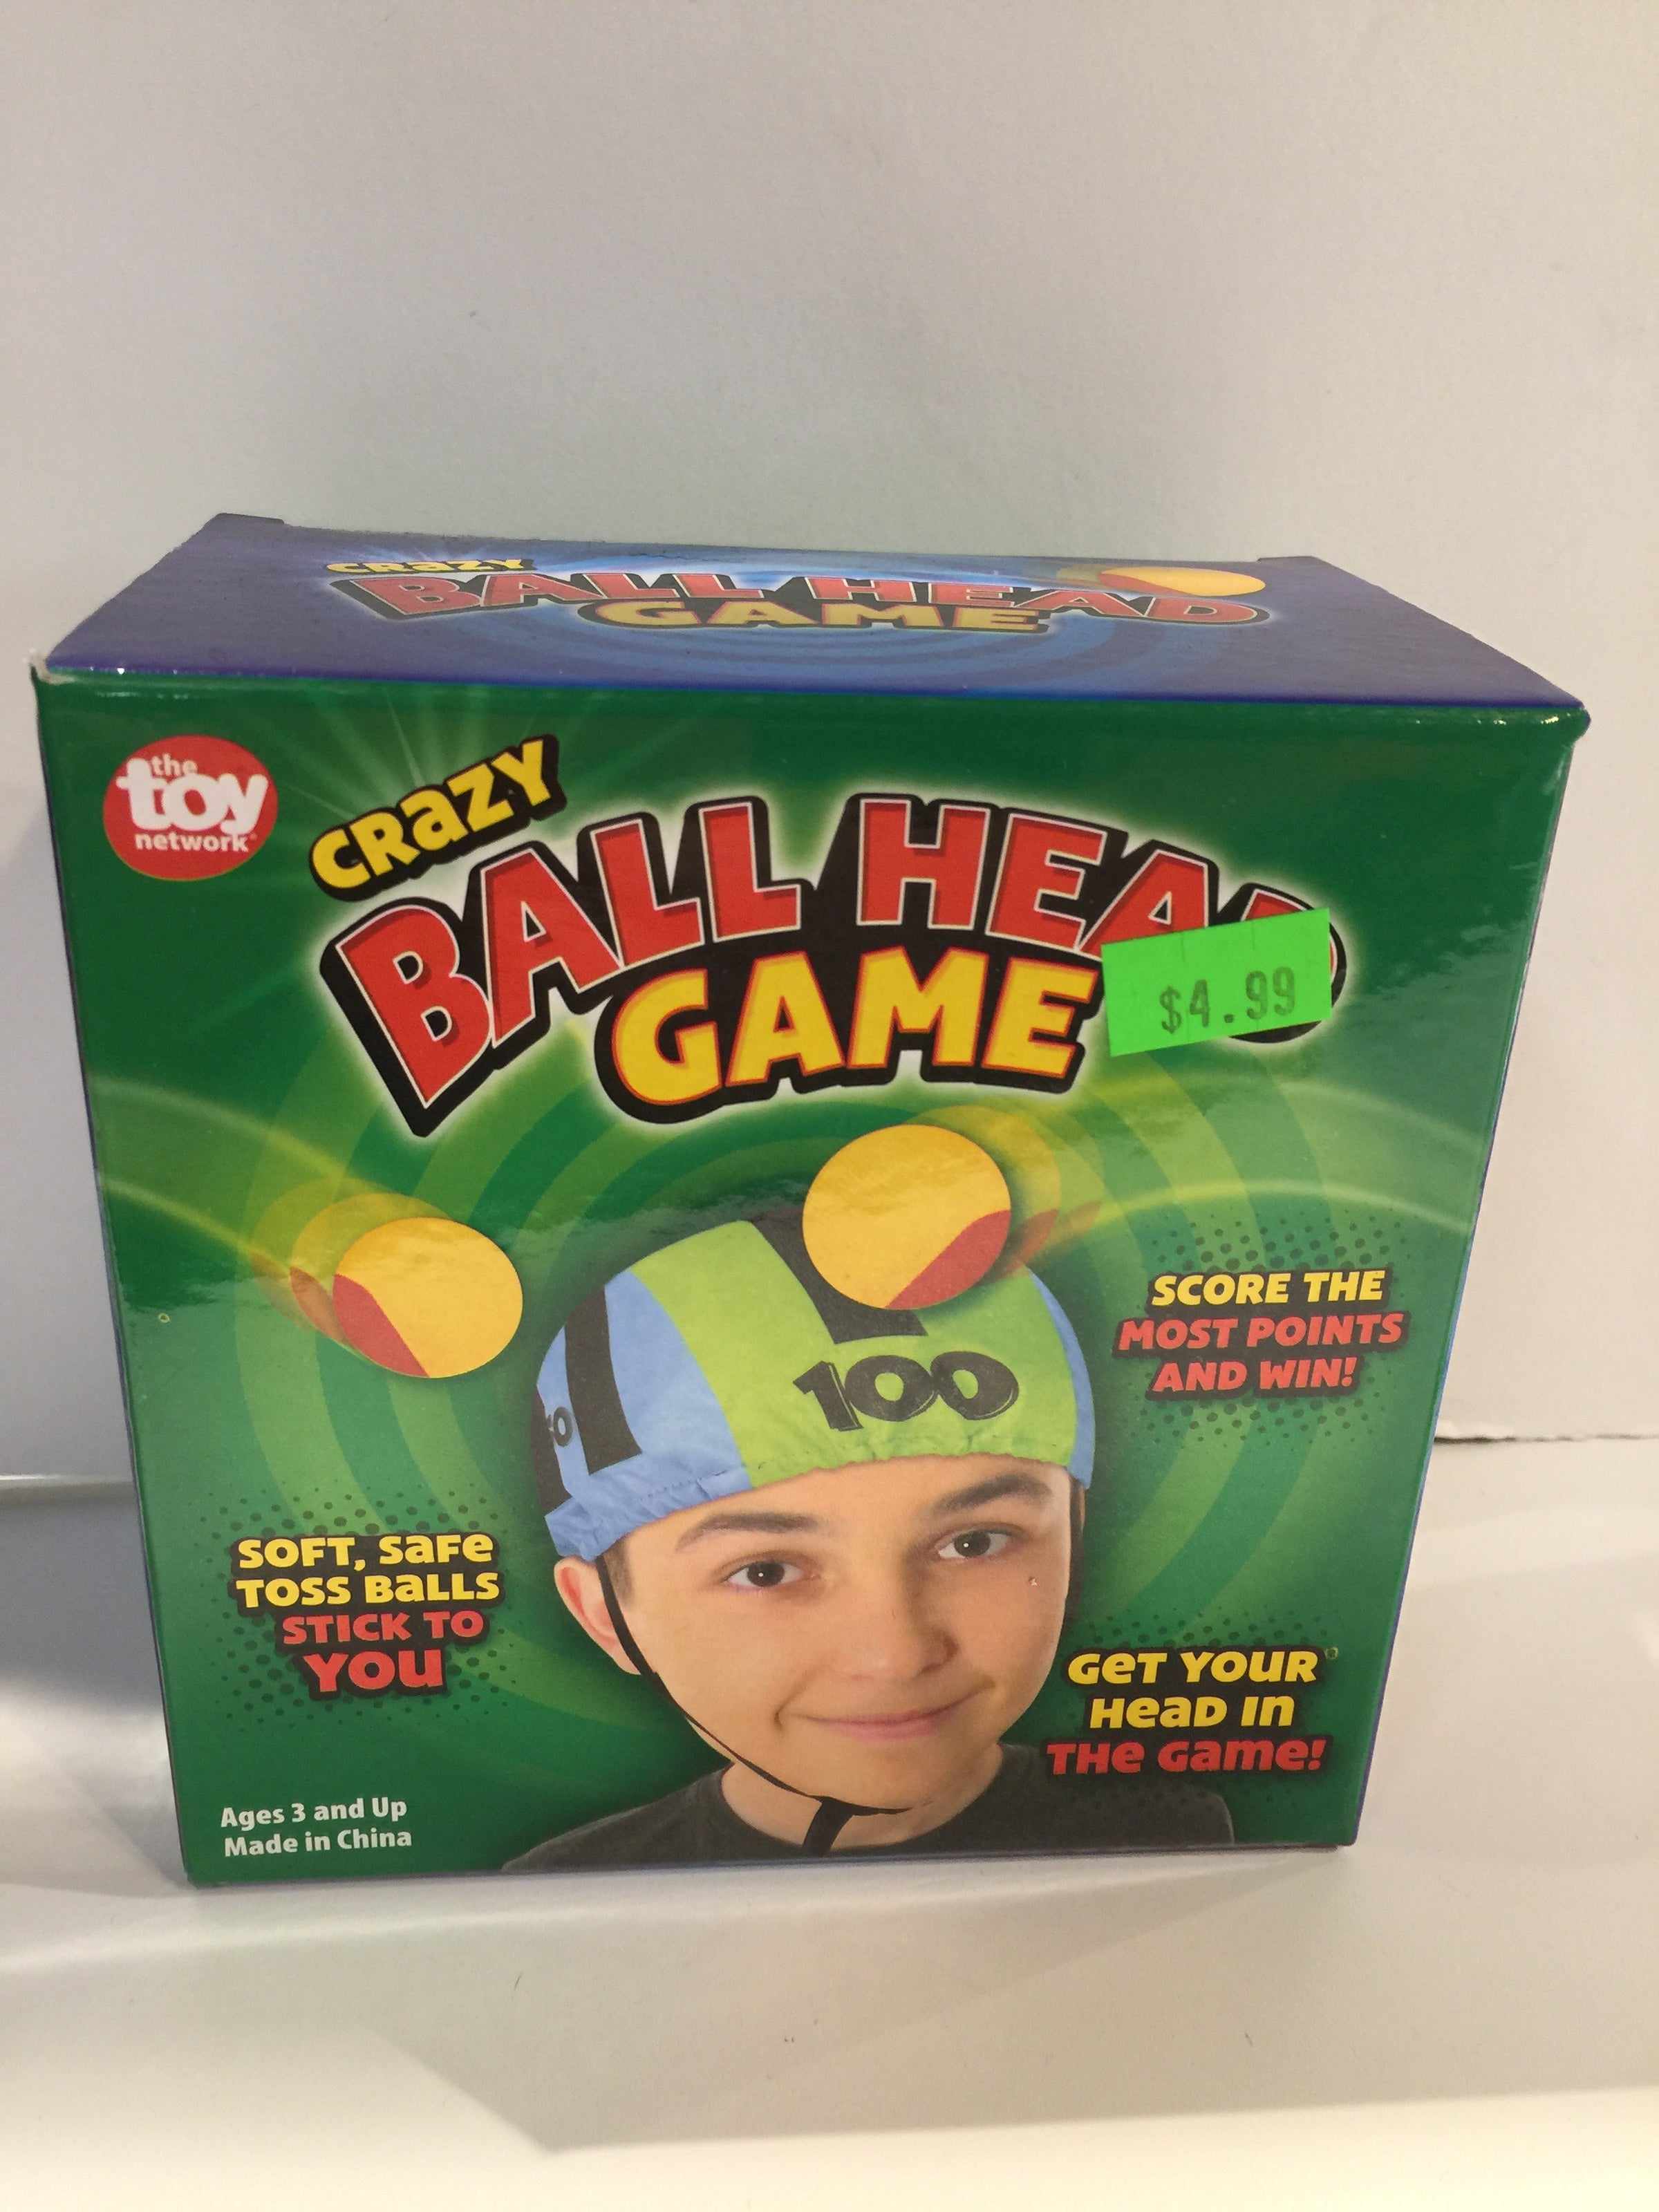 CRAZY BALL HEAD GAME